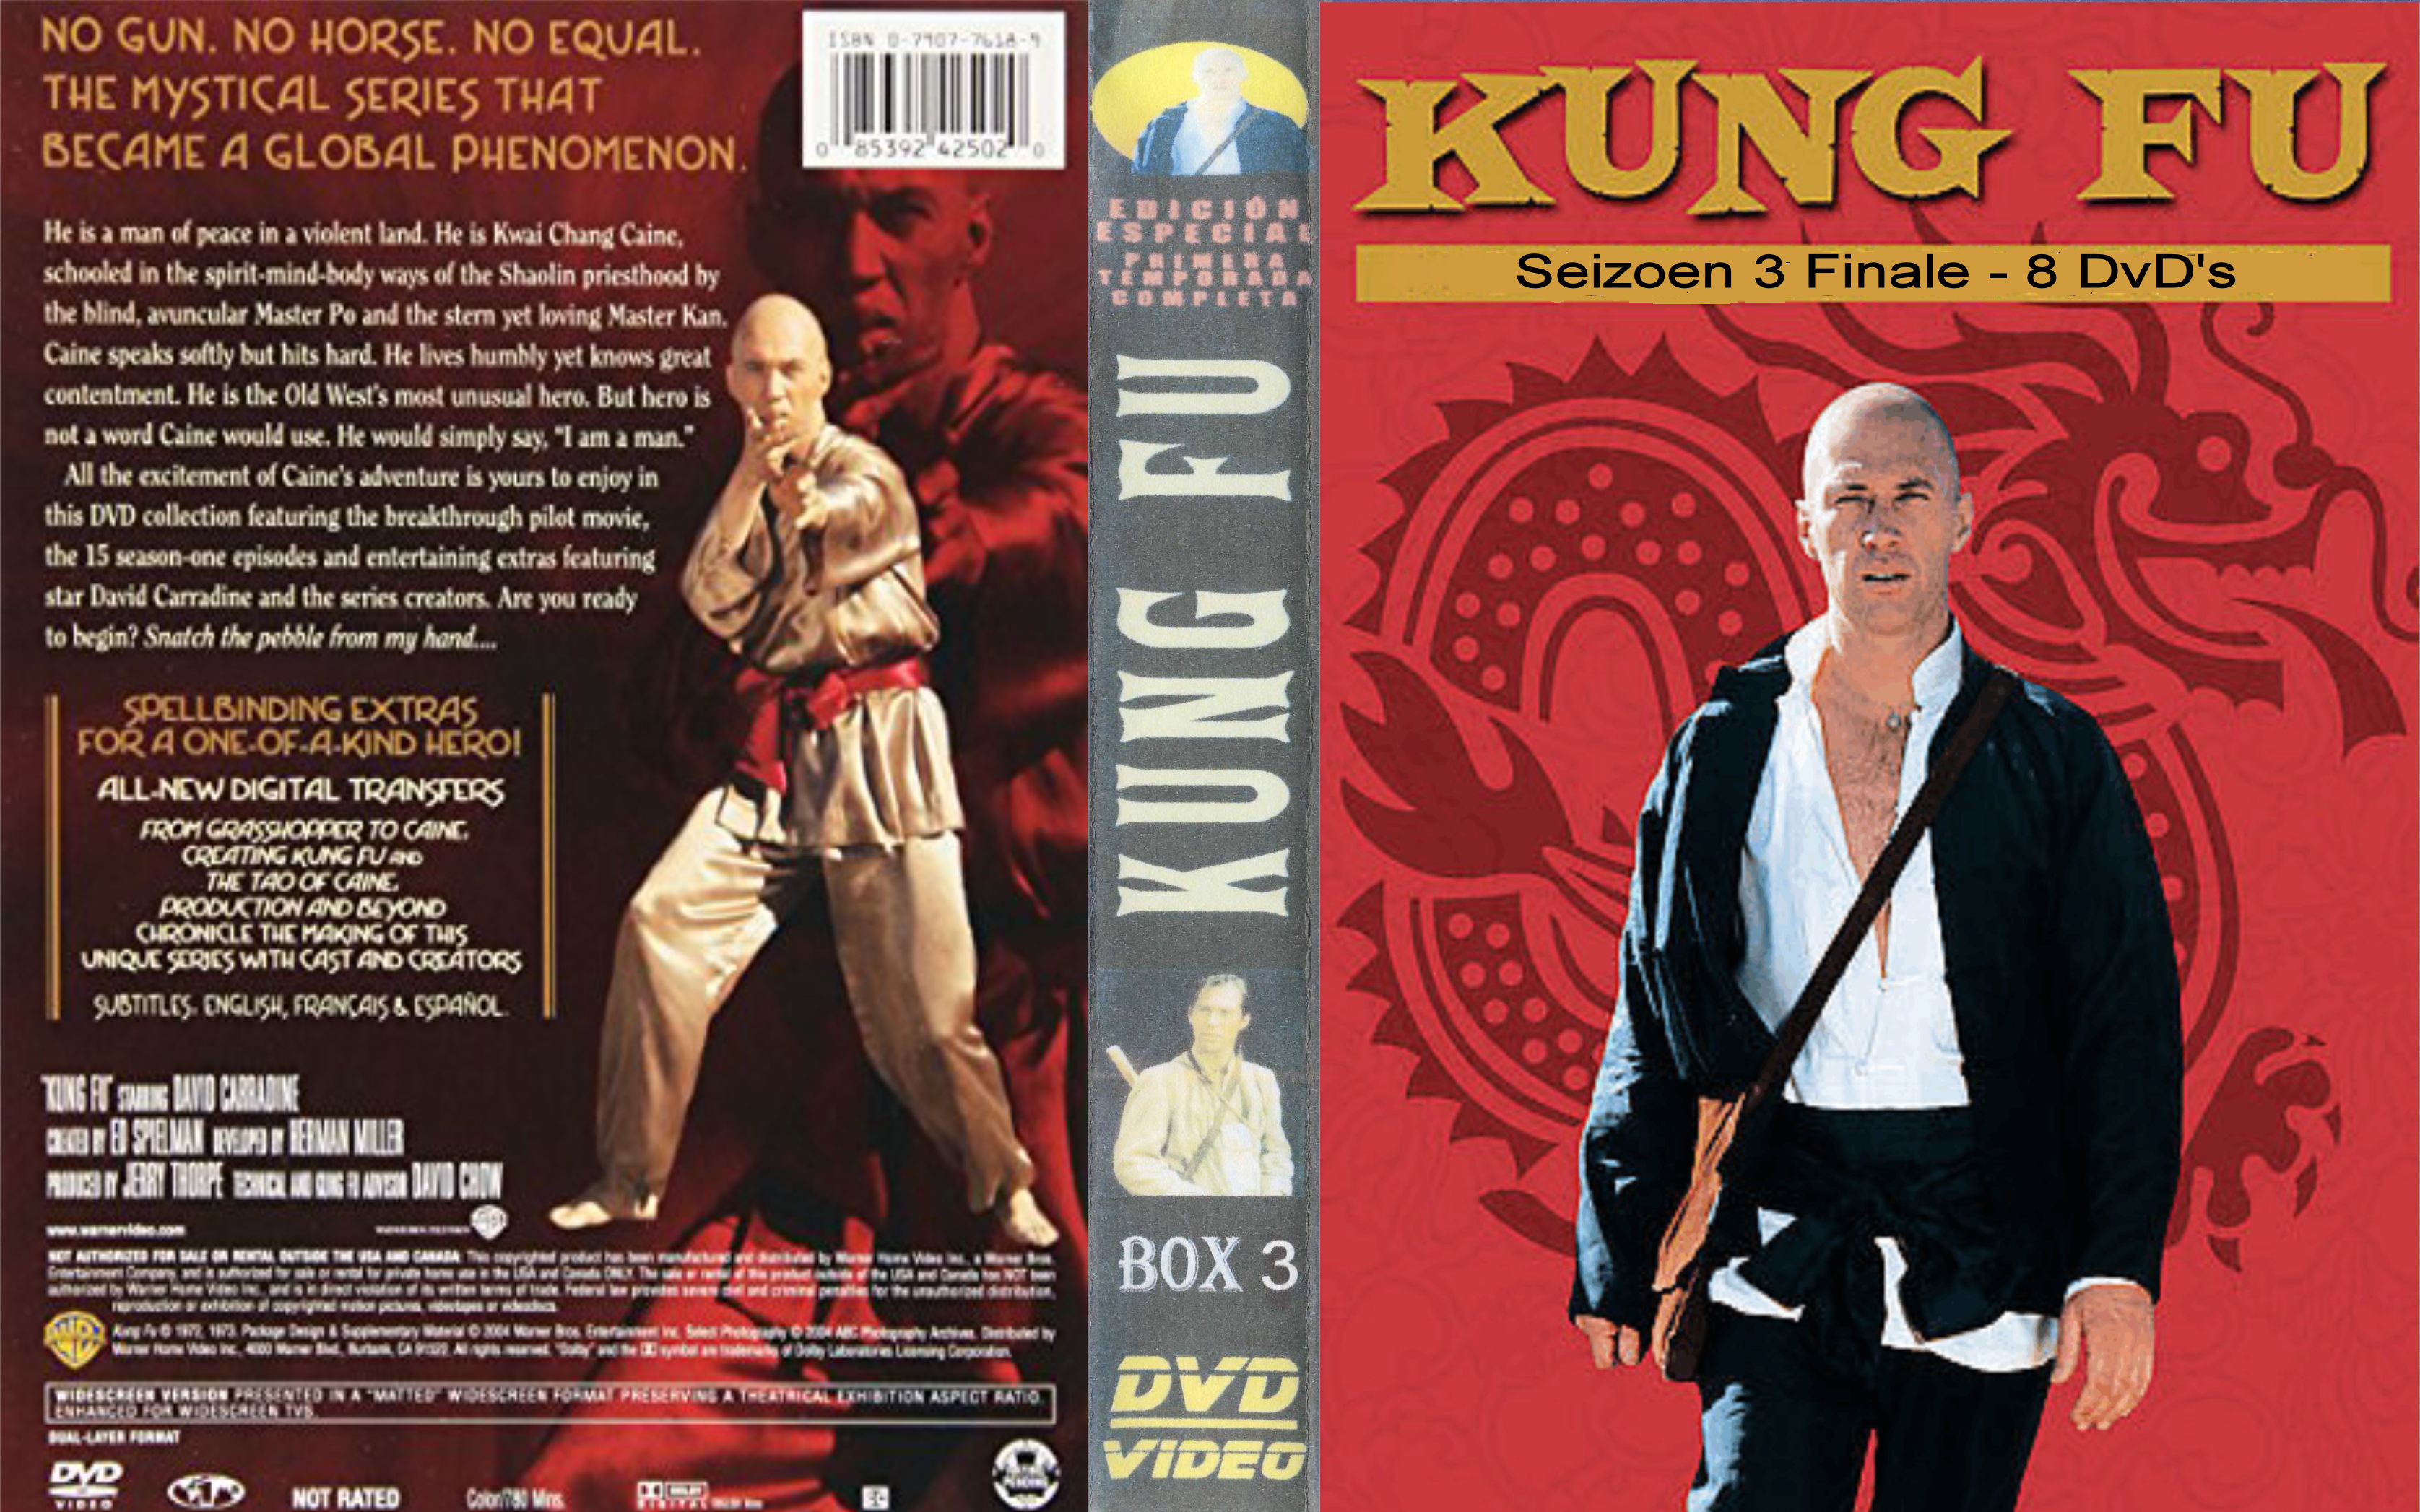 REPOST Kung Fu ( David Carradine ) 1974 - 75 Seizoen 3 - DvD 5